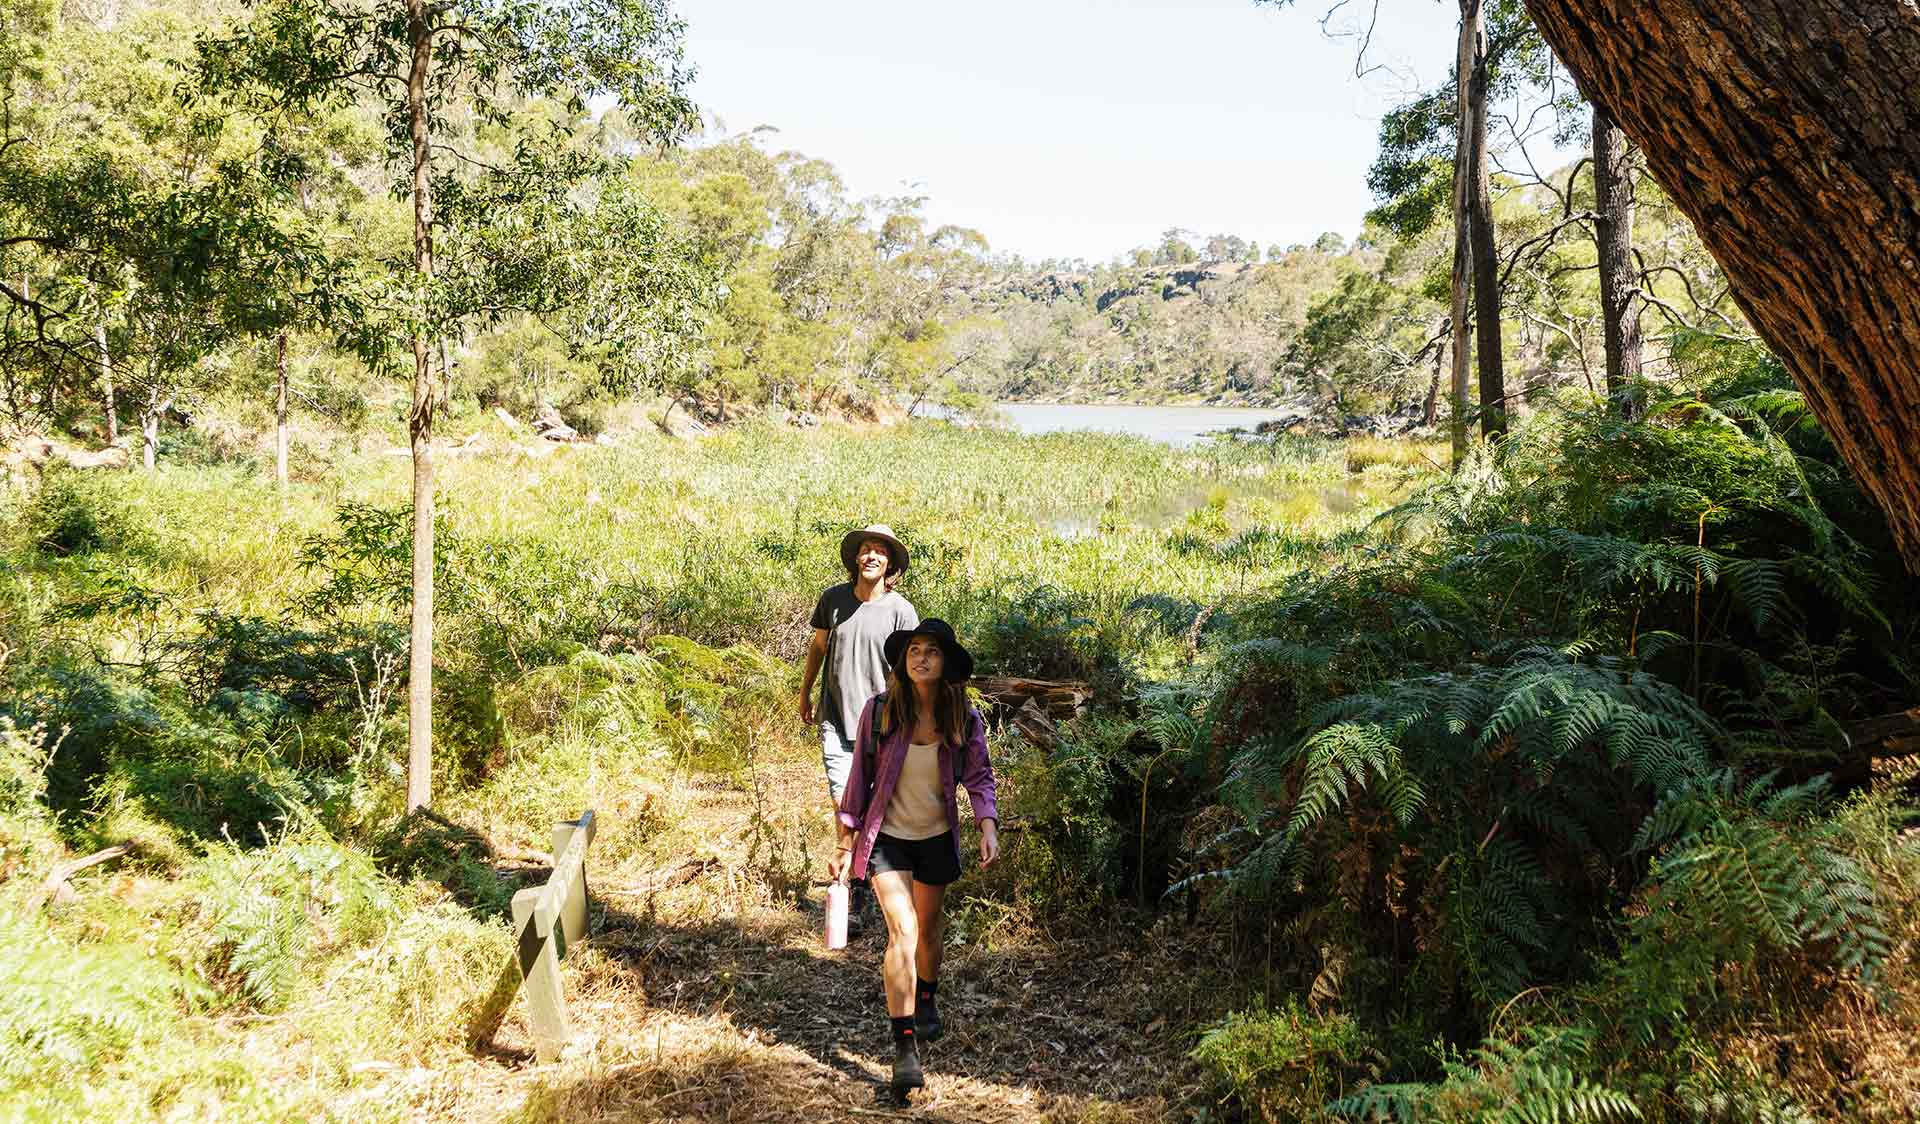 A young woman leading a man on a walk through Budj Bim National Park